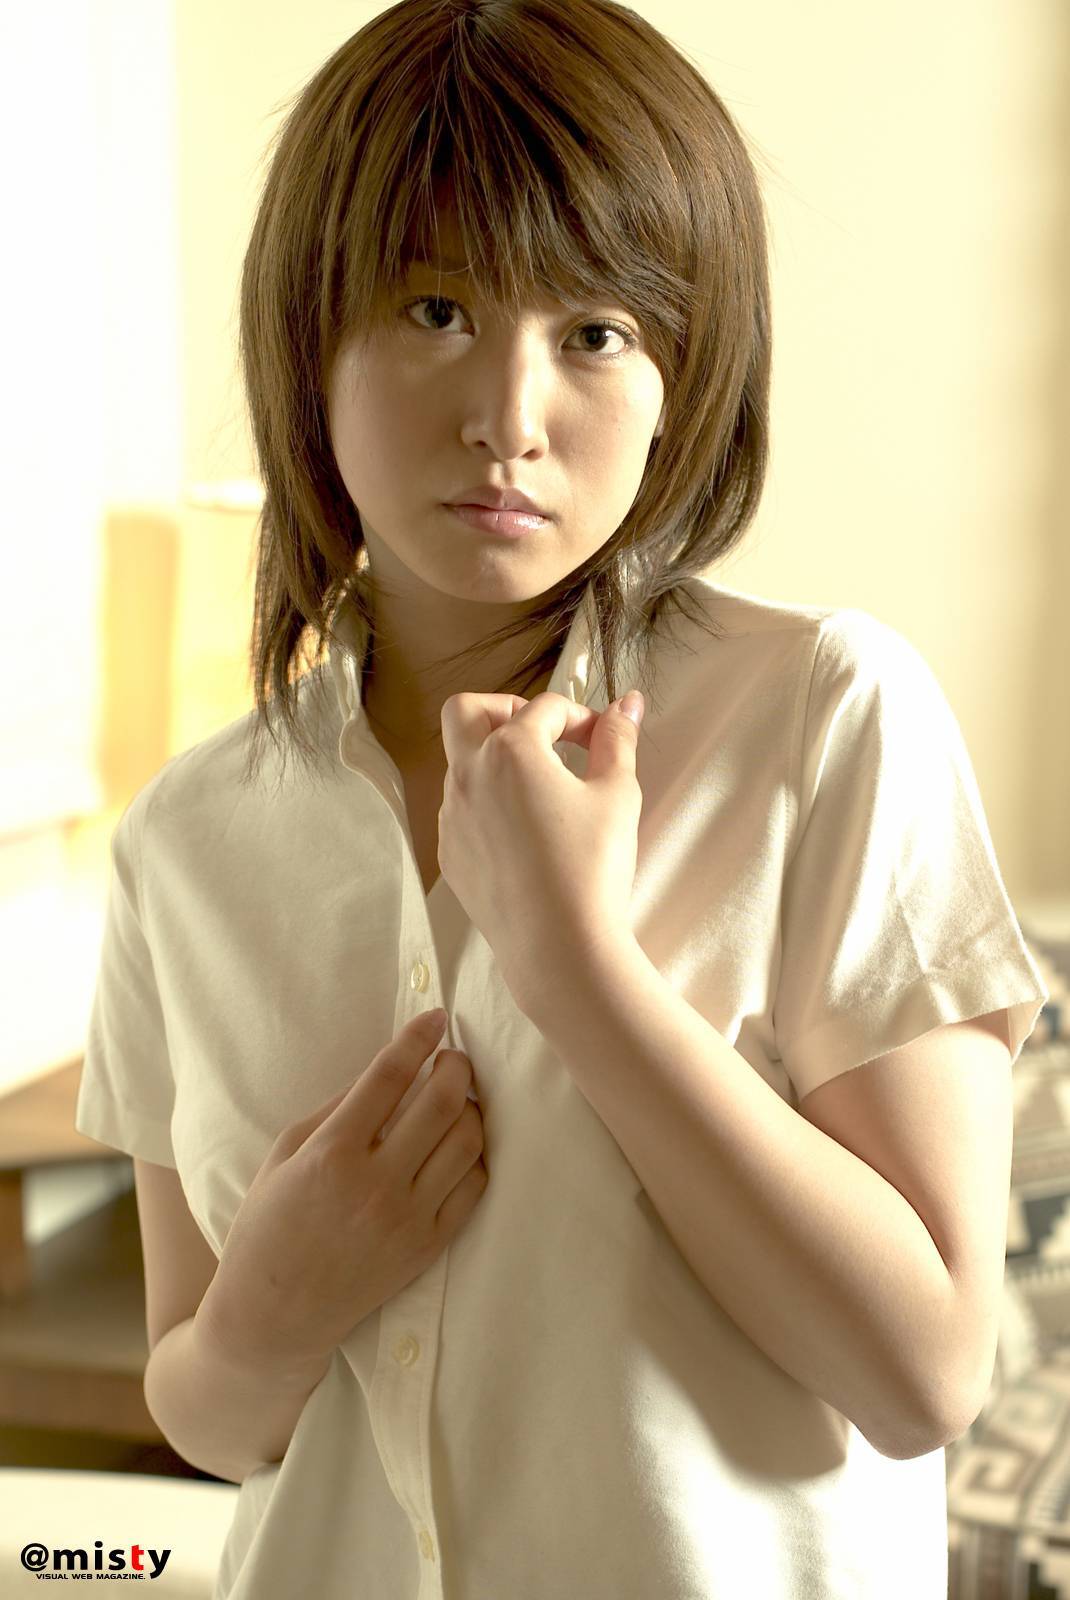 Azuko Otani [@ misty] no.086 - Aiko koyatsu